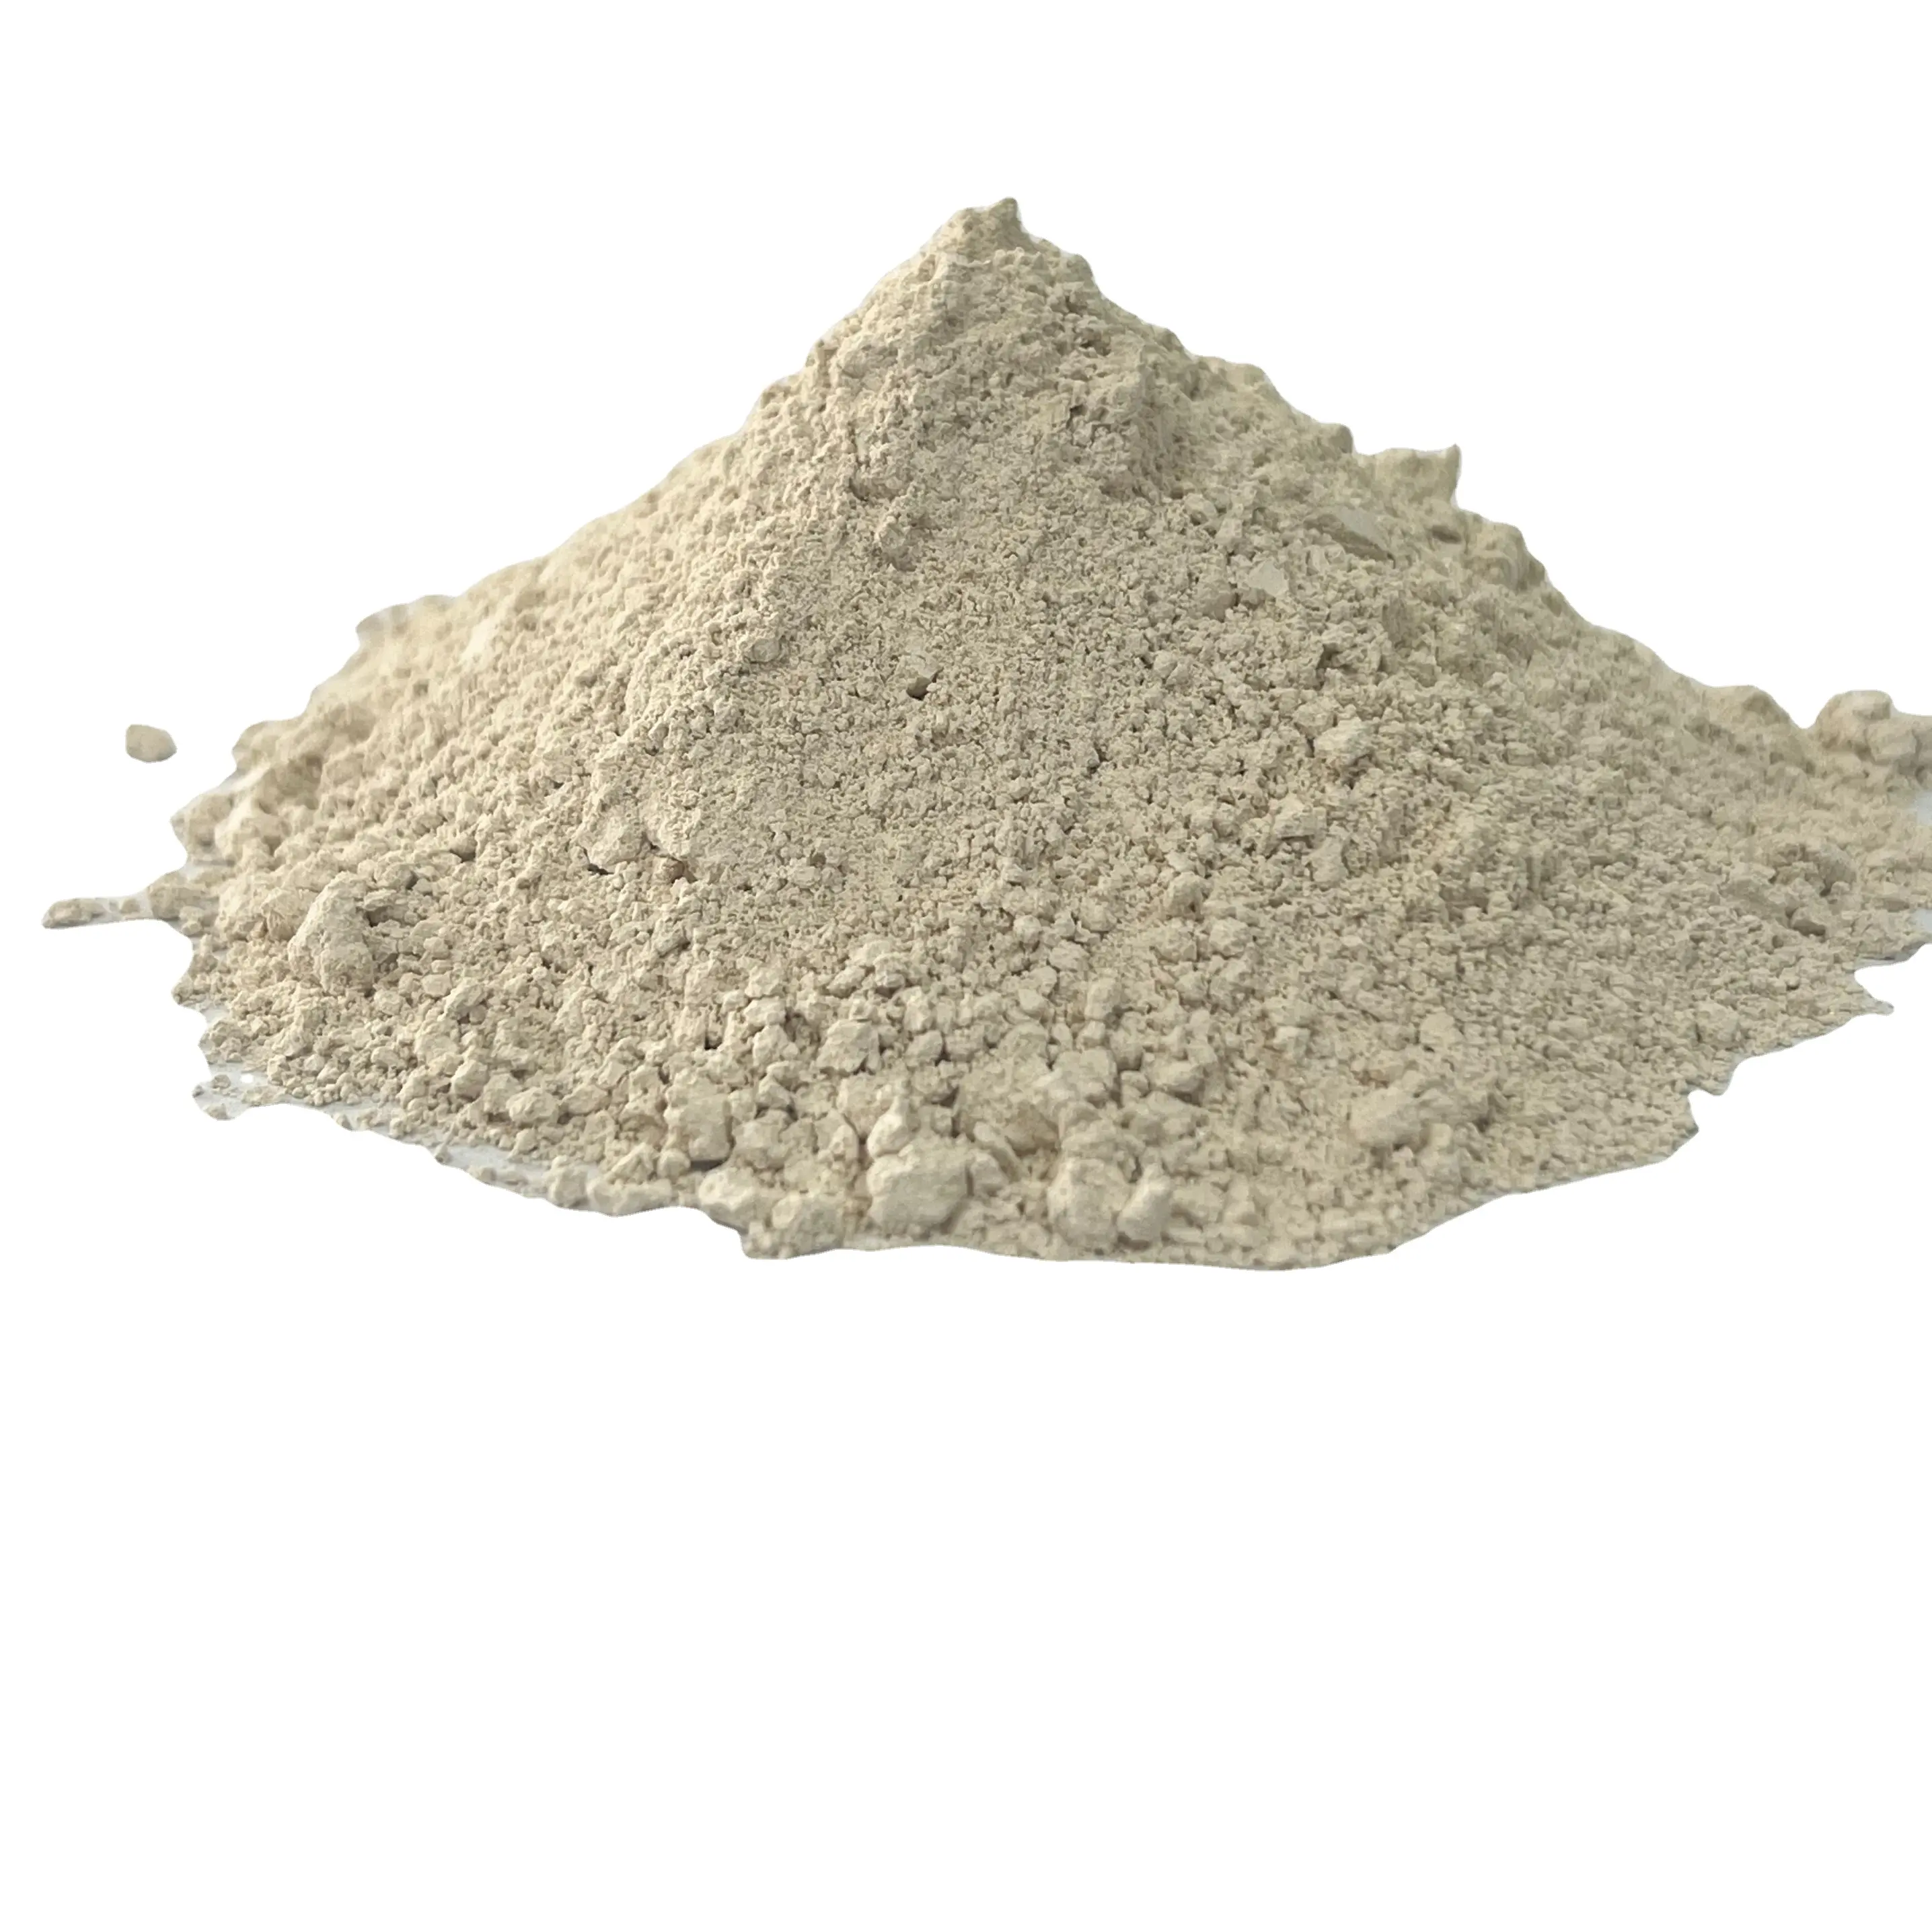 provide high grade 60% sillimanite powder 200mesh from India bricks high quality Al2 SiO4 O sillimanite